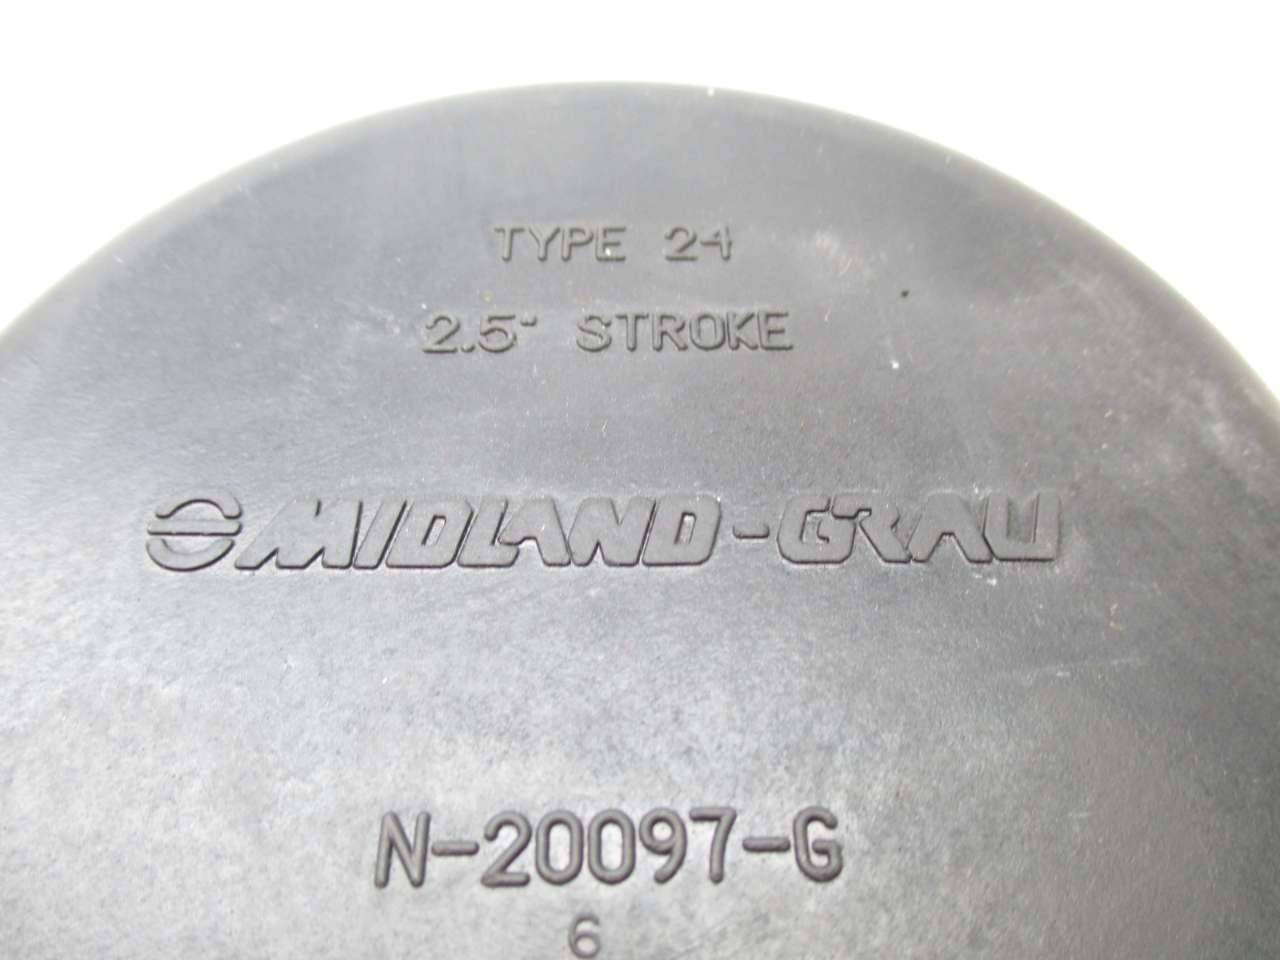 NEW MIDLAND GRAU TYPE 24 2.5 STROKE AIR BRAKE DIAPHRAGM N-20097-G ACTUATOR